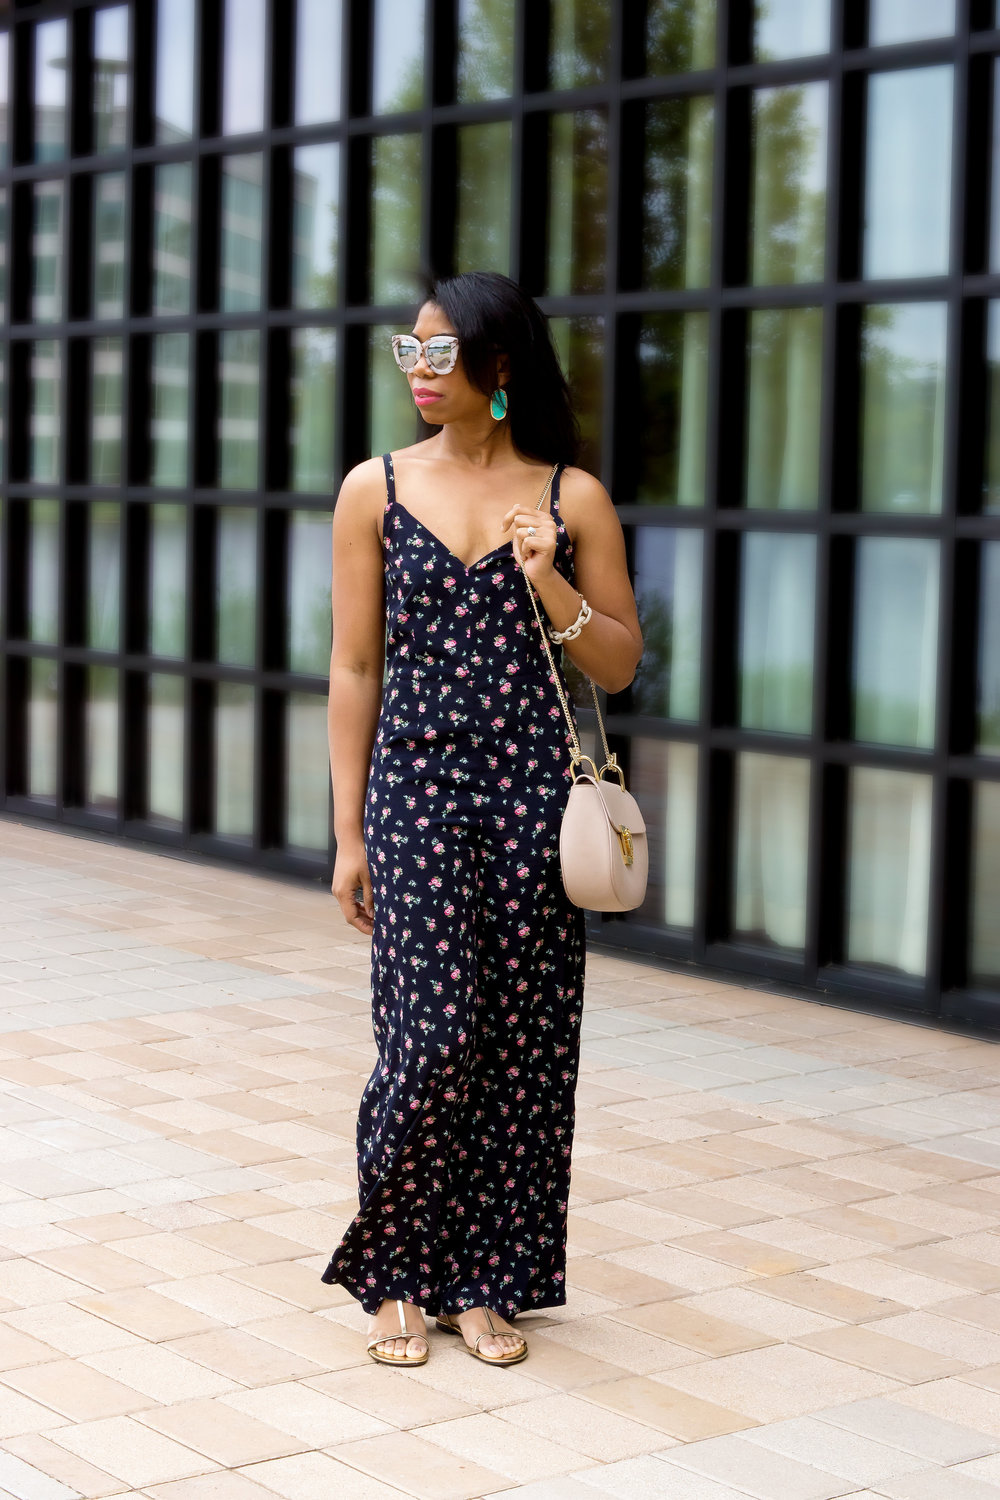 spring summer style floral jumpsuit under $100 chloe handbag stephanie taylor jackson best black fashion bloggers